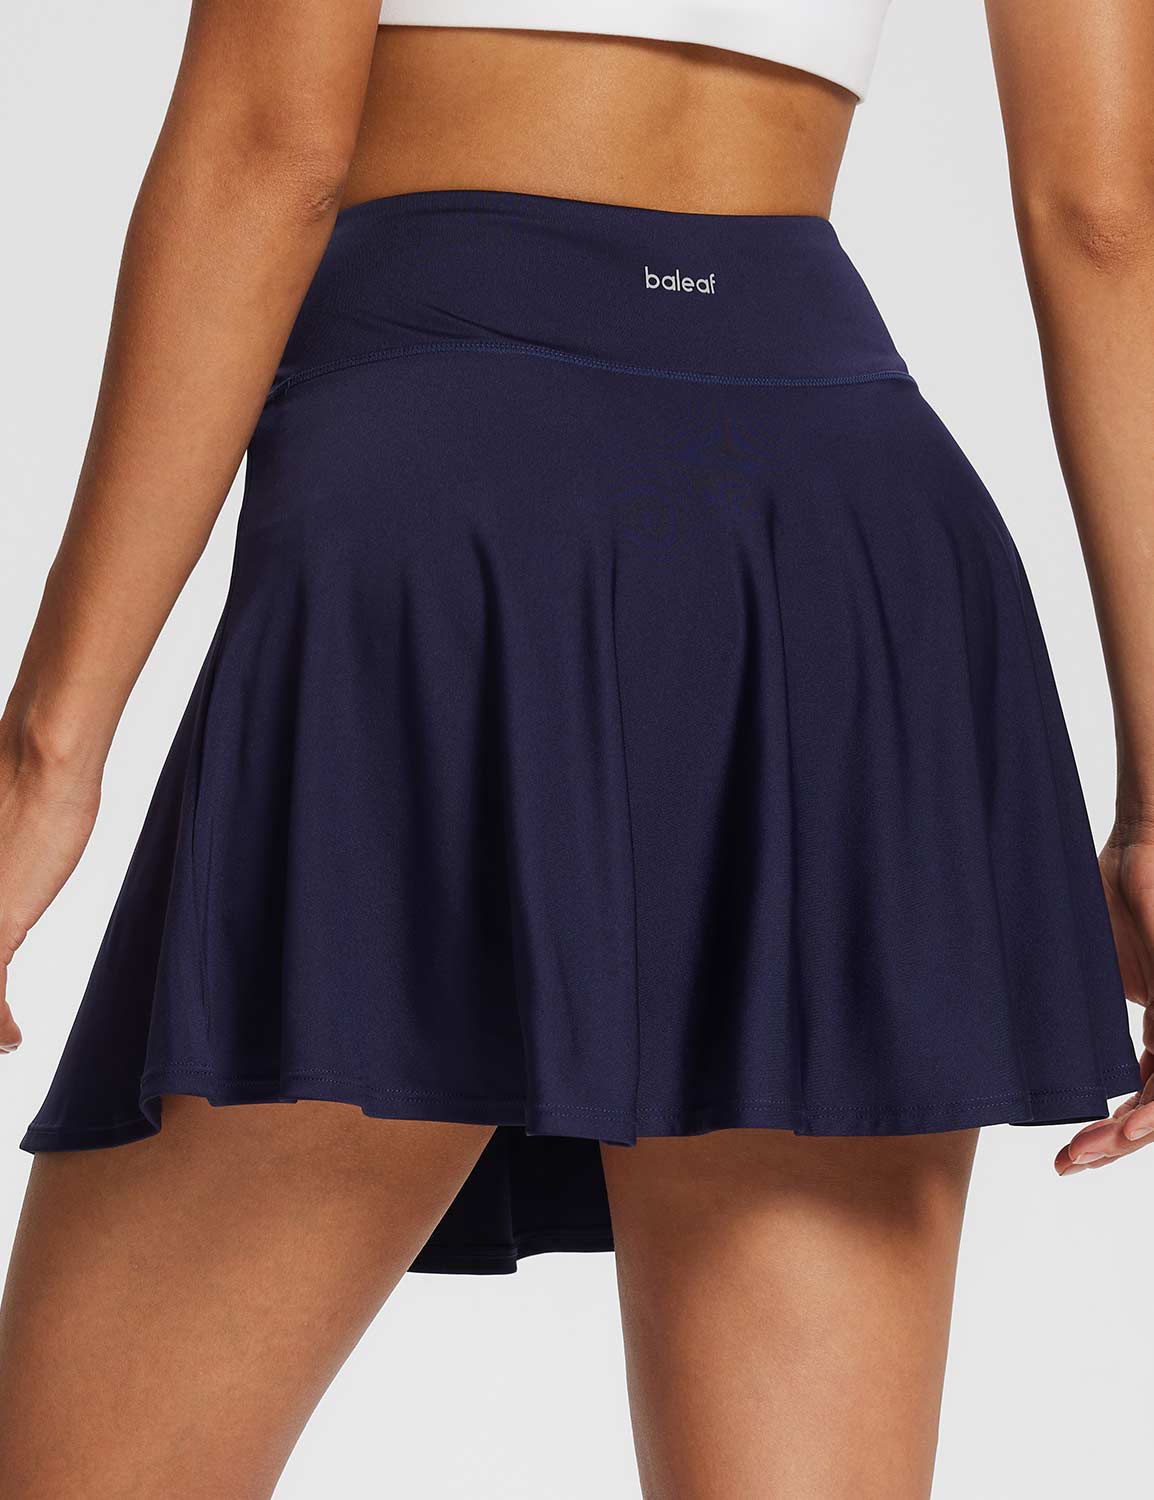 Baleaf Women's High-Rise Pleated Tennis Skirts w Ball Pockets Peacoat Back